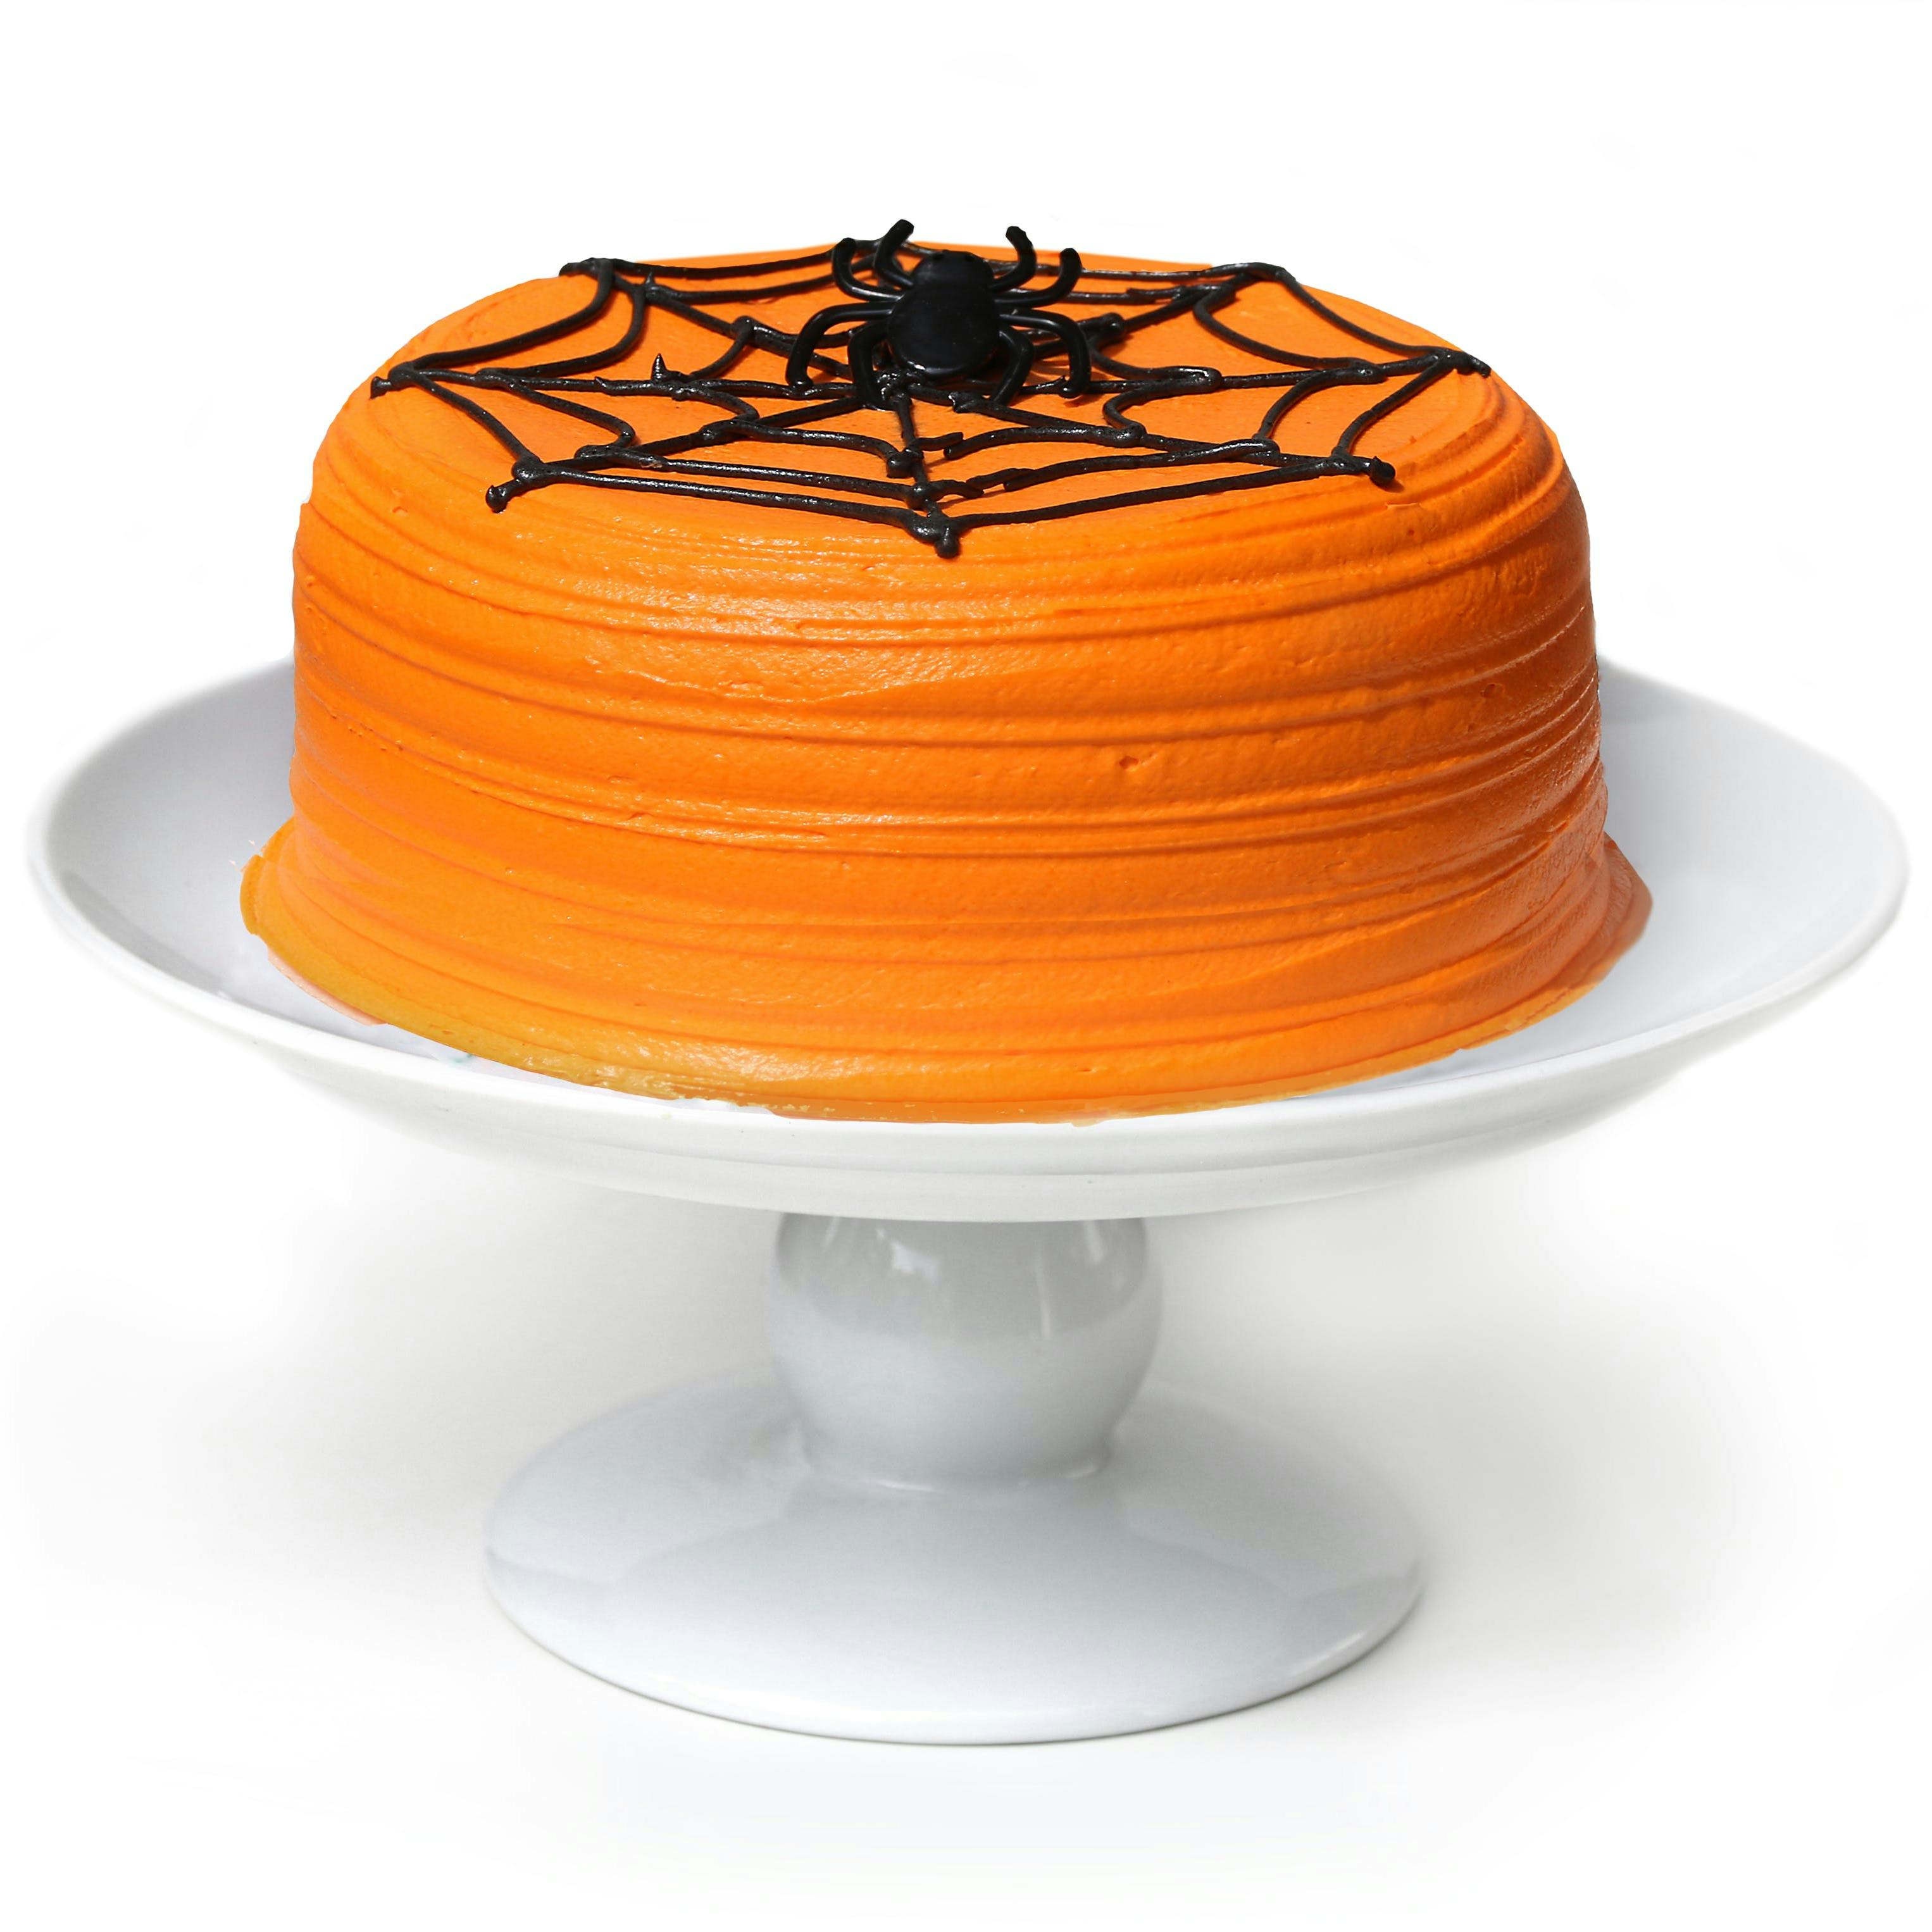 halloween spider birthday cakes